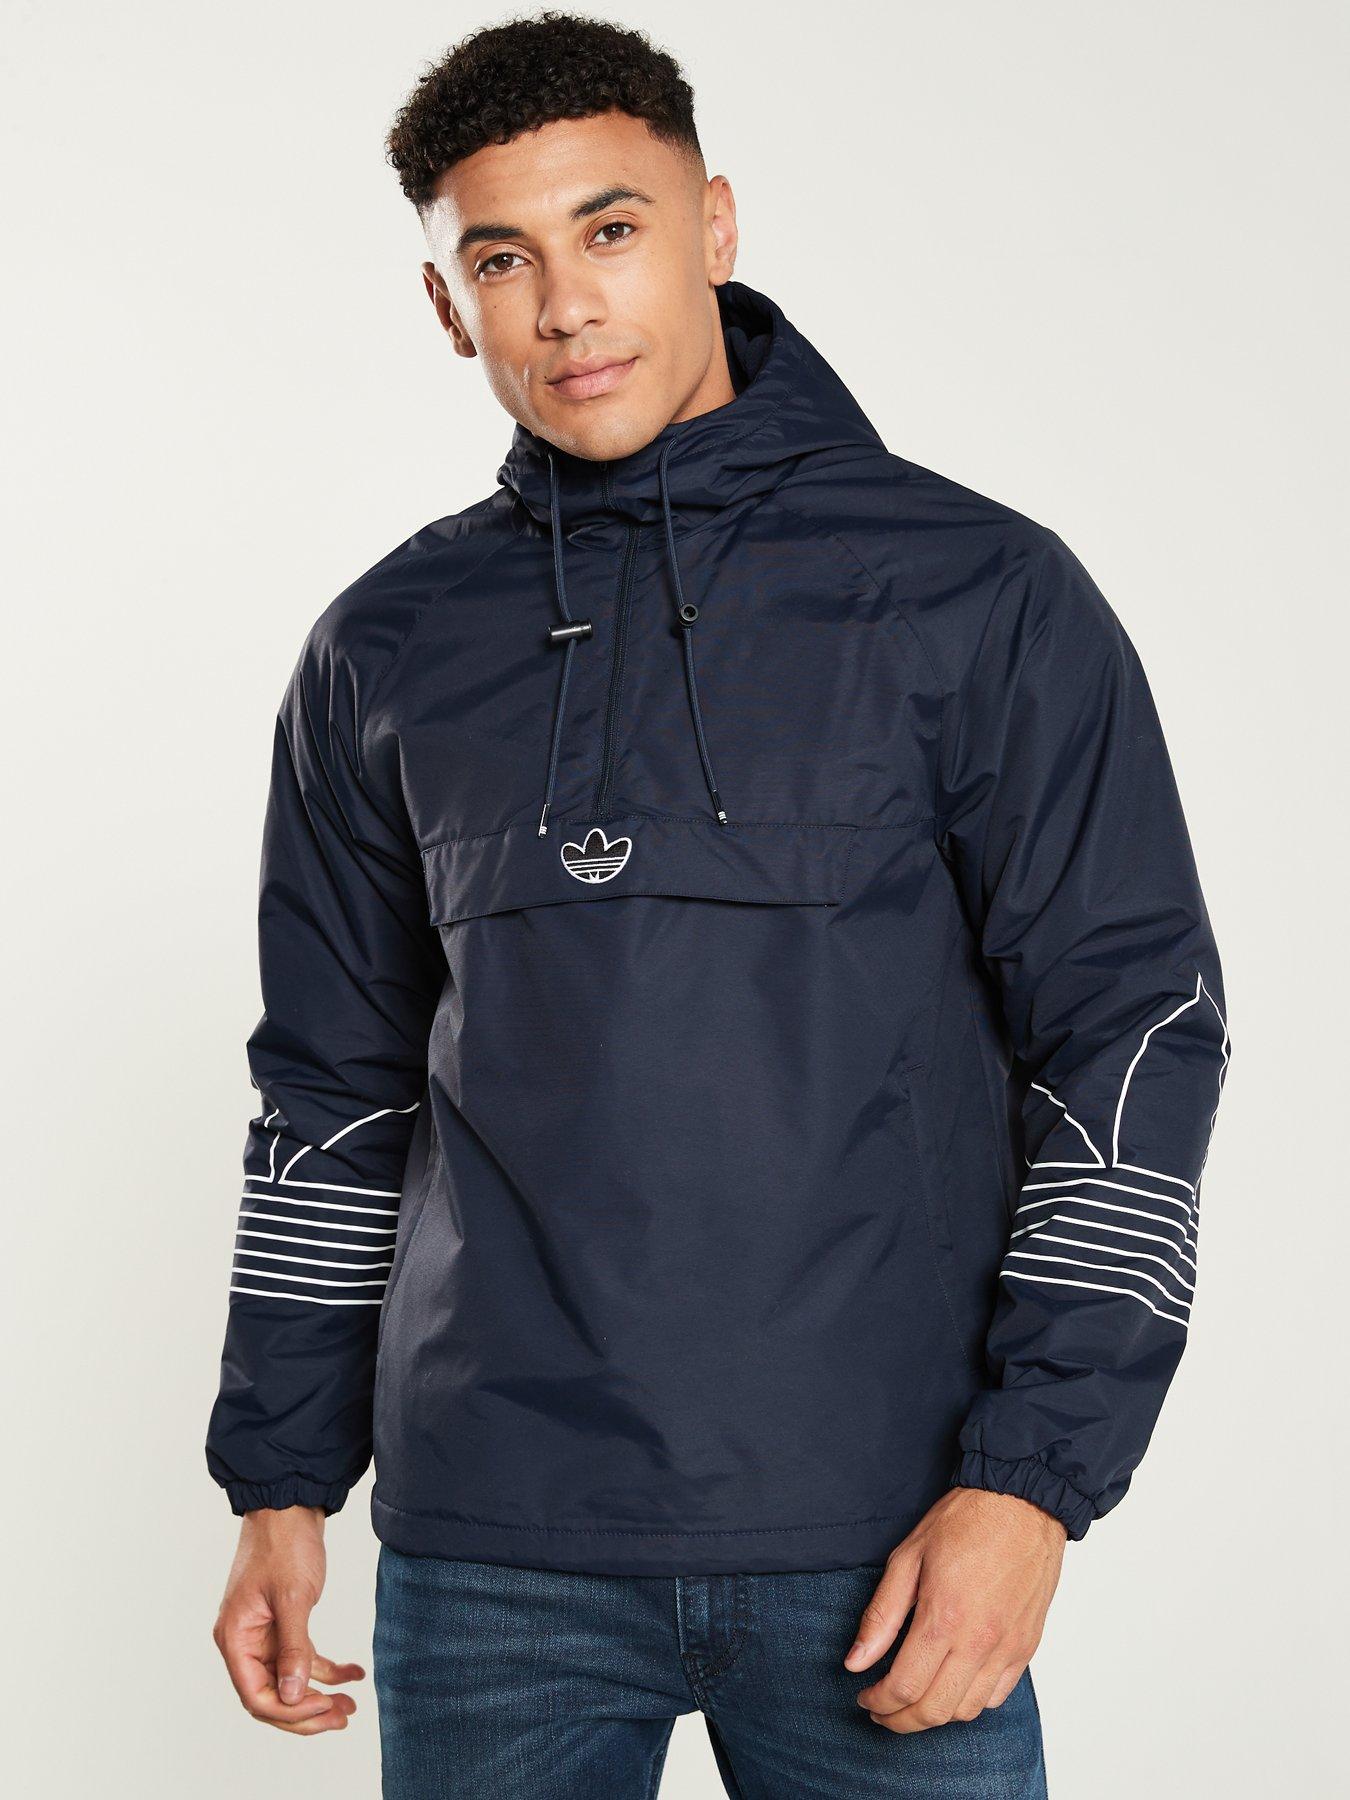 mens navy adidas jacket